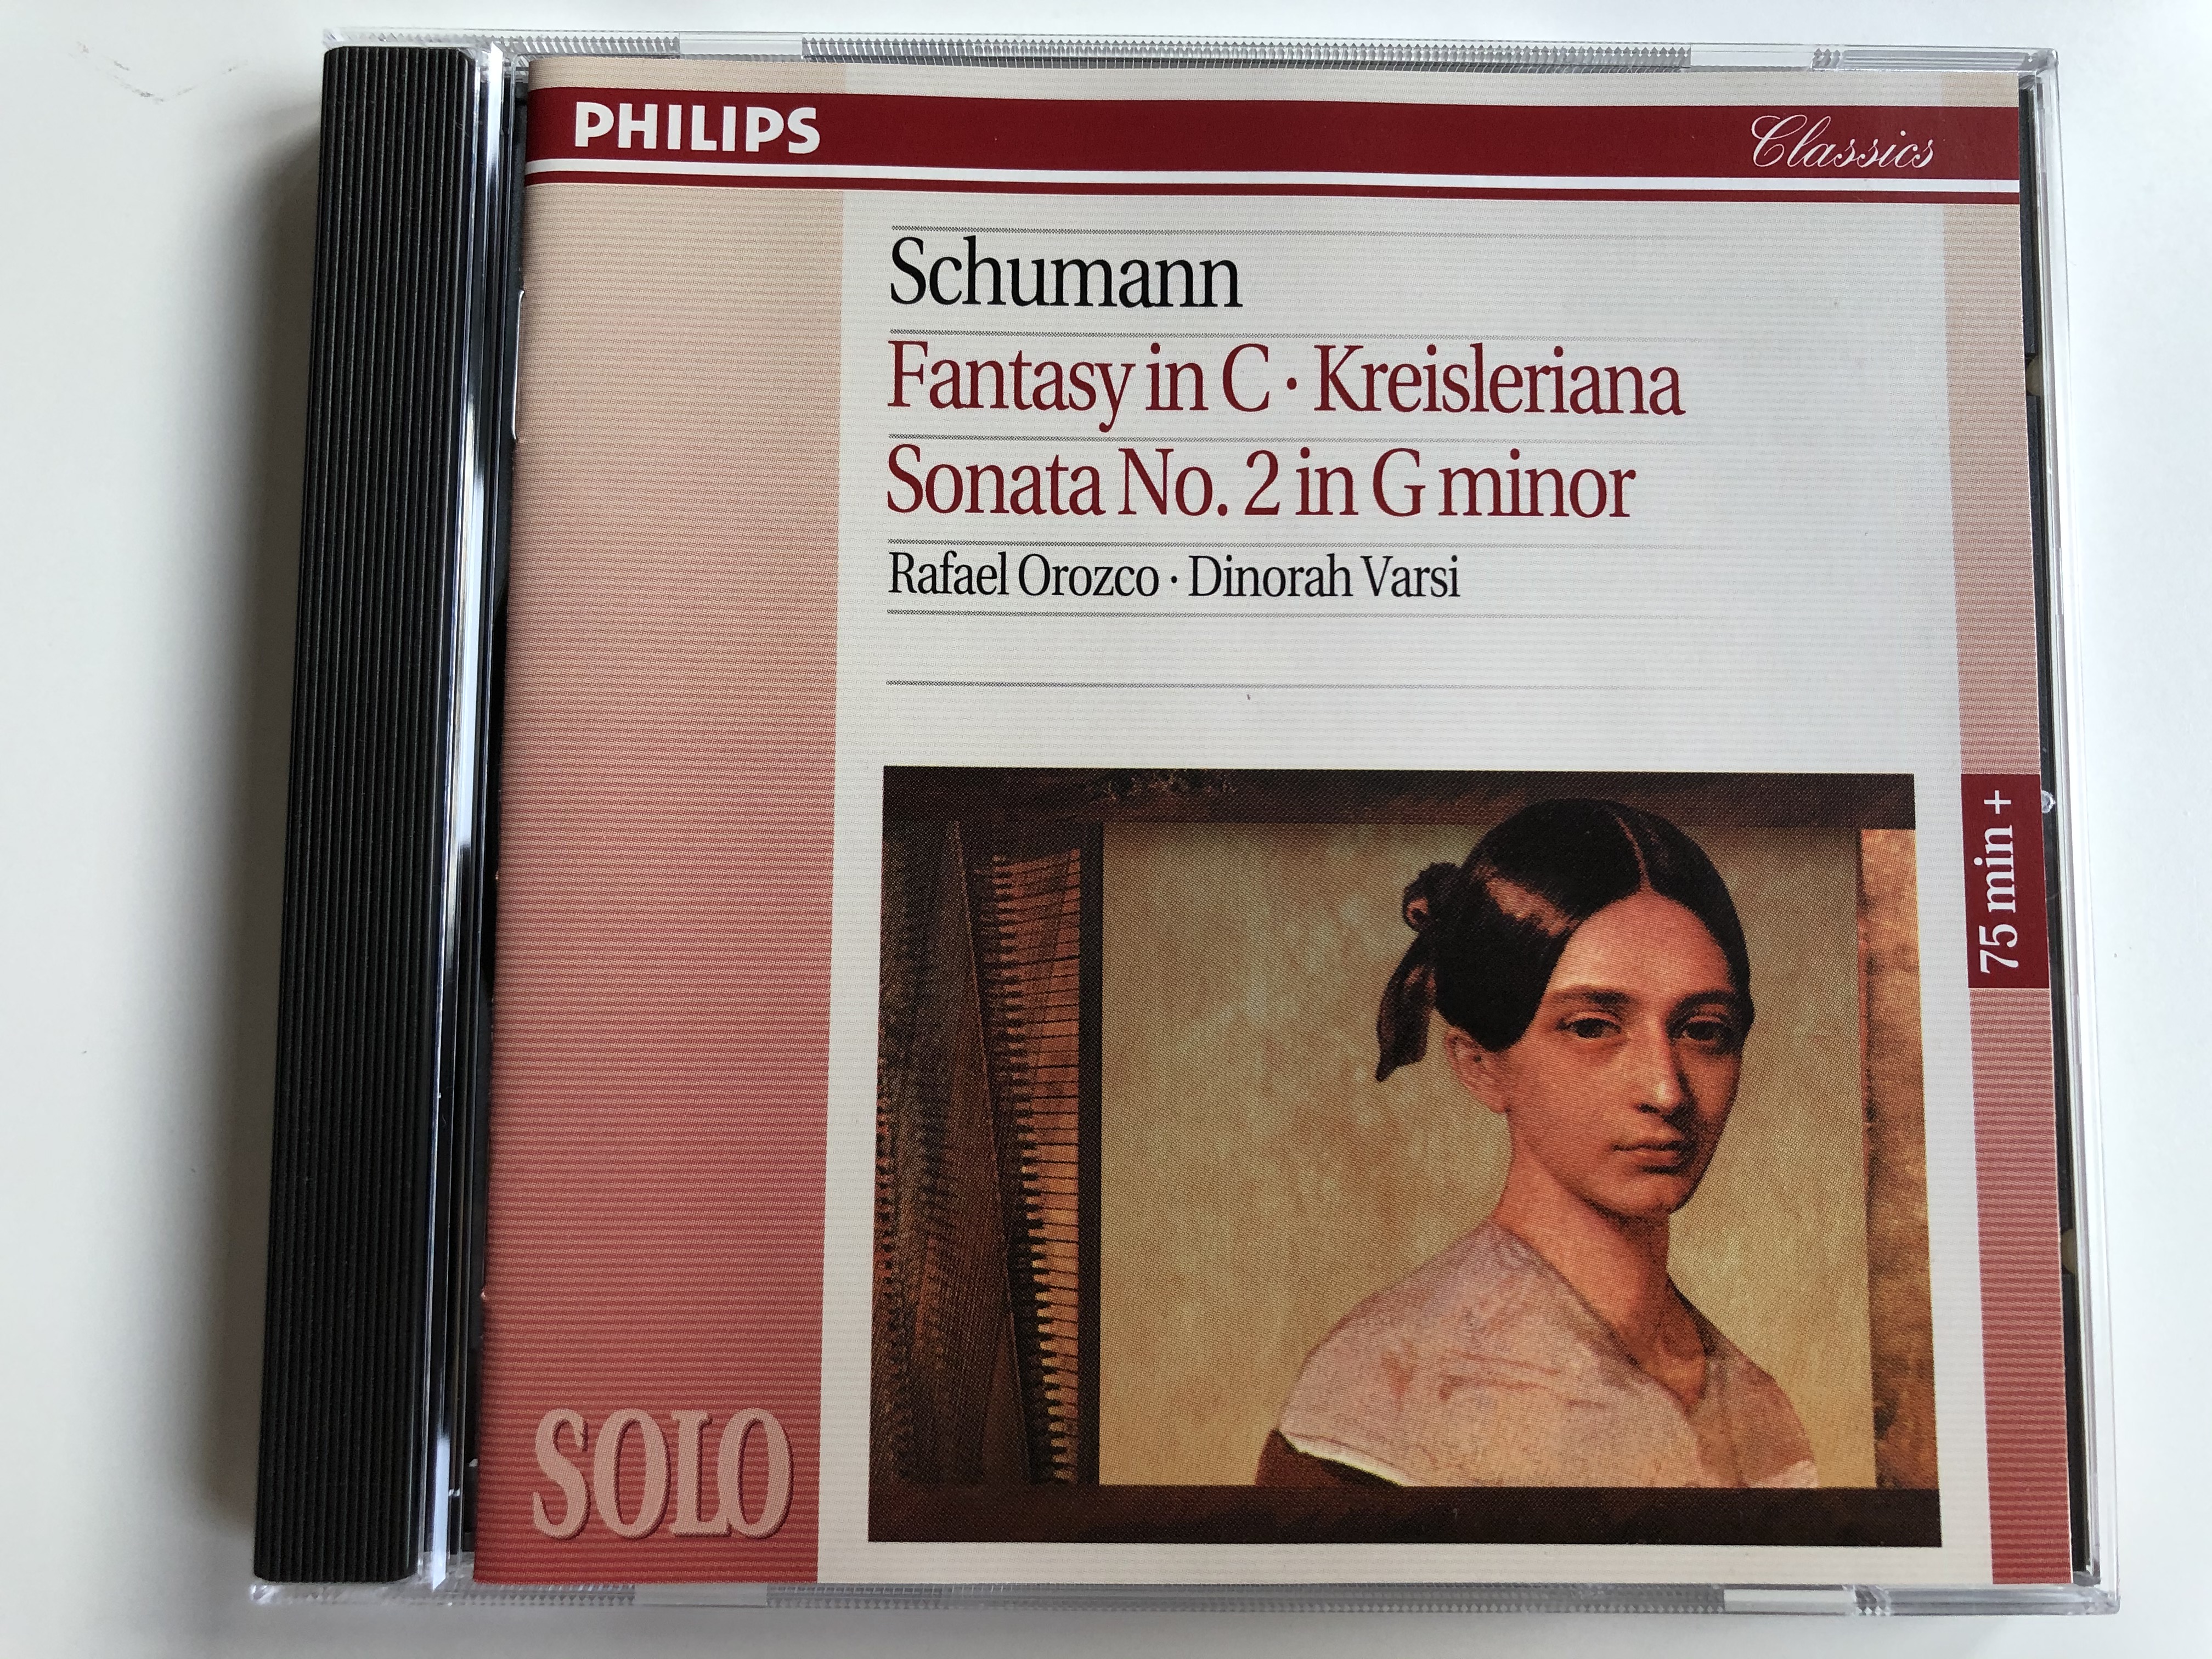 schumann-fantasy-in-c-kreisleriana-sonata-no.-2-in-g-minor-rafael-orozco-dinorah-varsi-philips-audio-cd-1994-442-653-2-1-.jpg